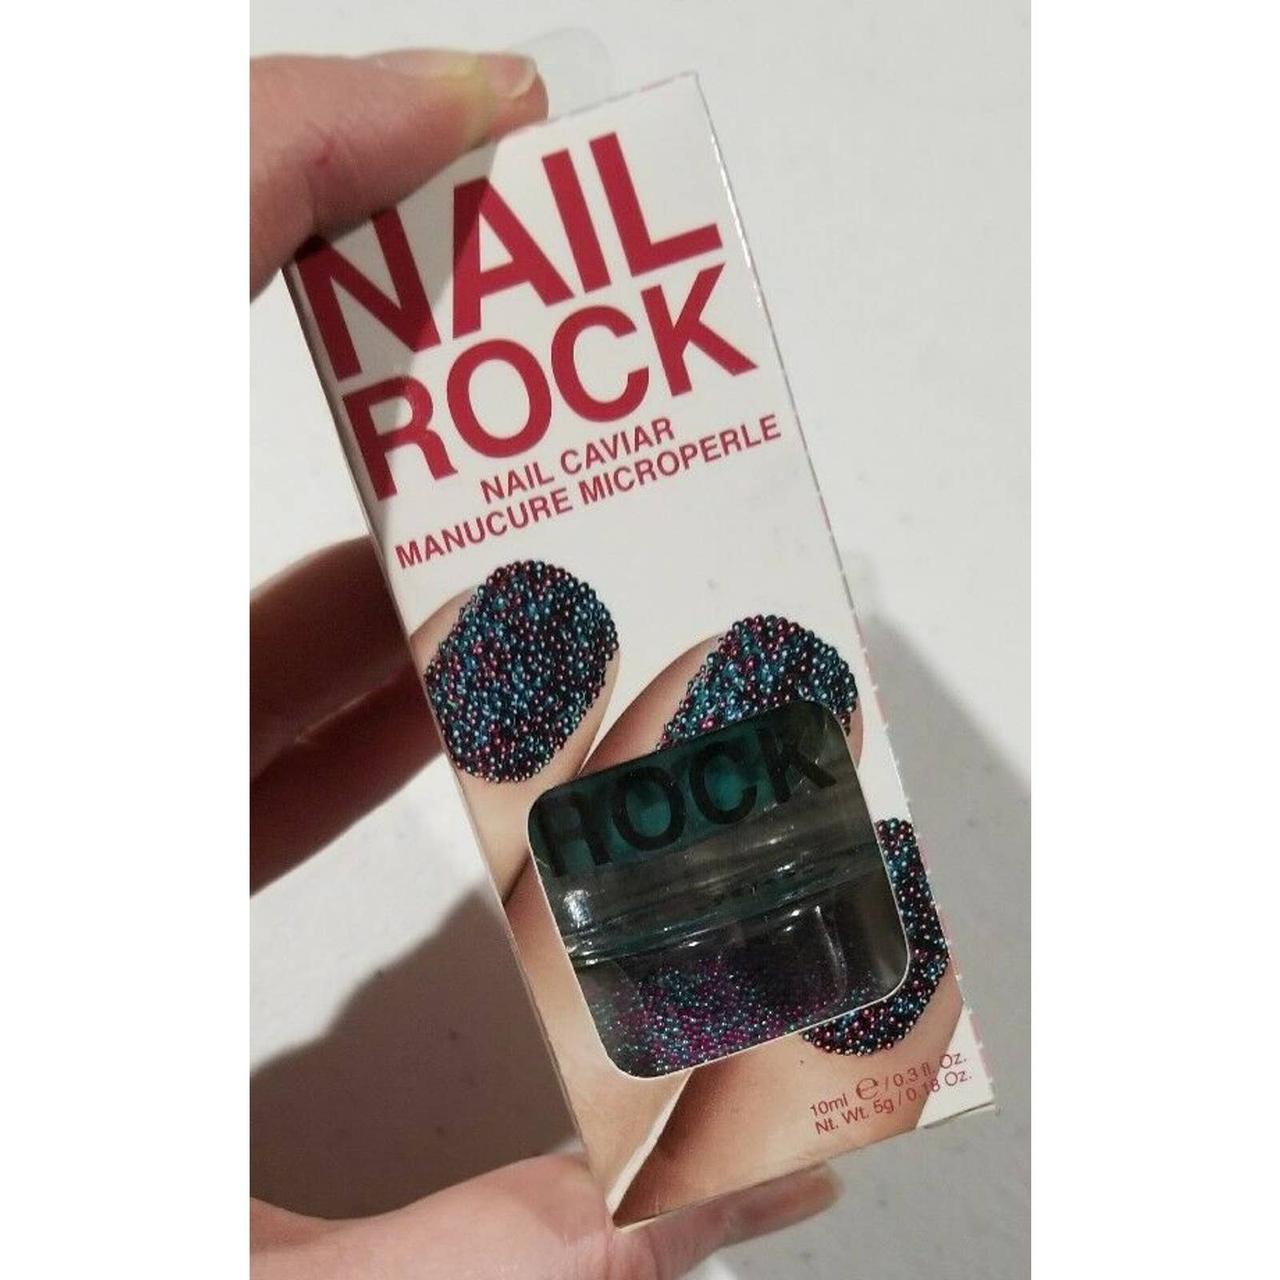 NAIL ROCK Nail Caviar 3D Manicure Polish set in... - Depop